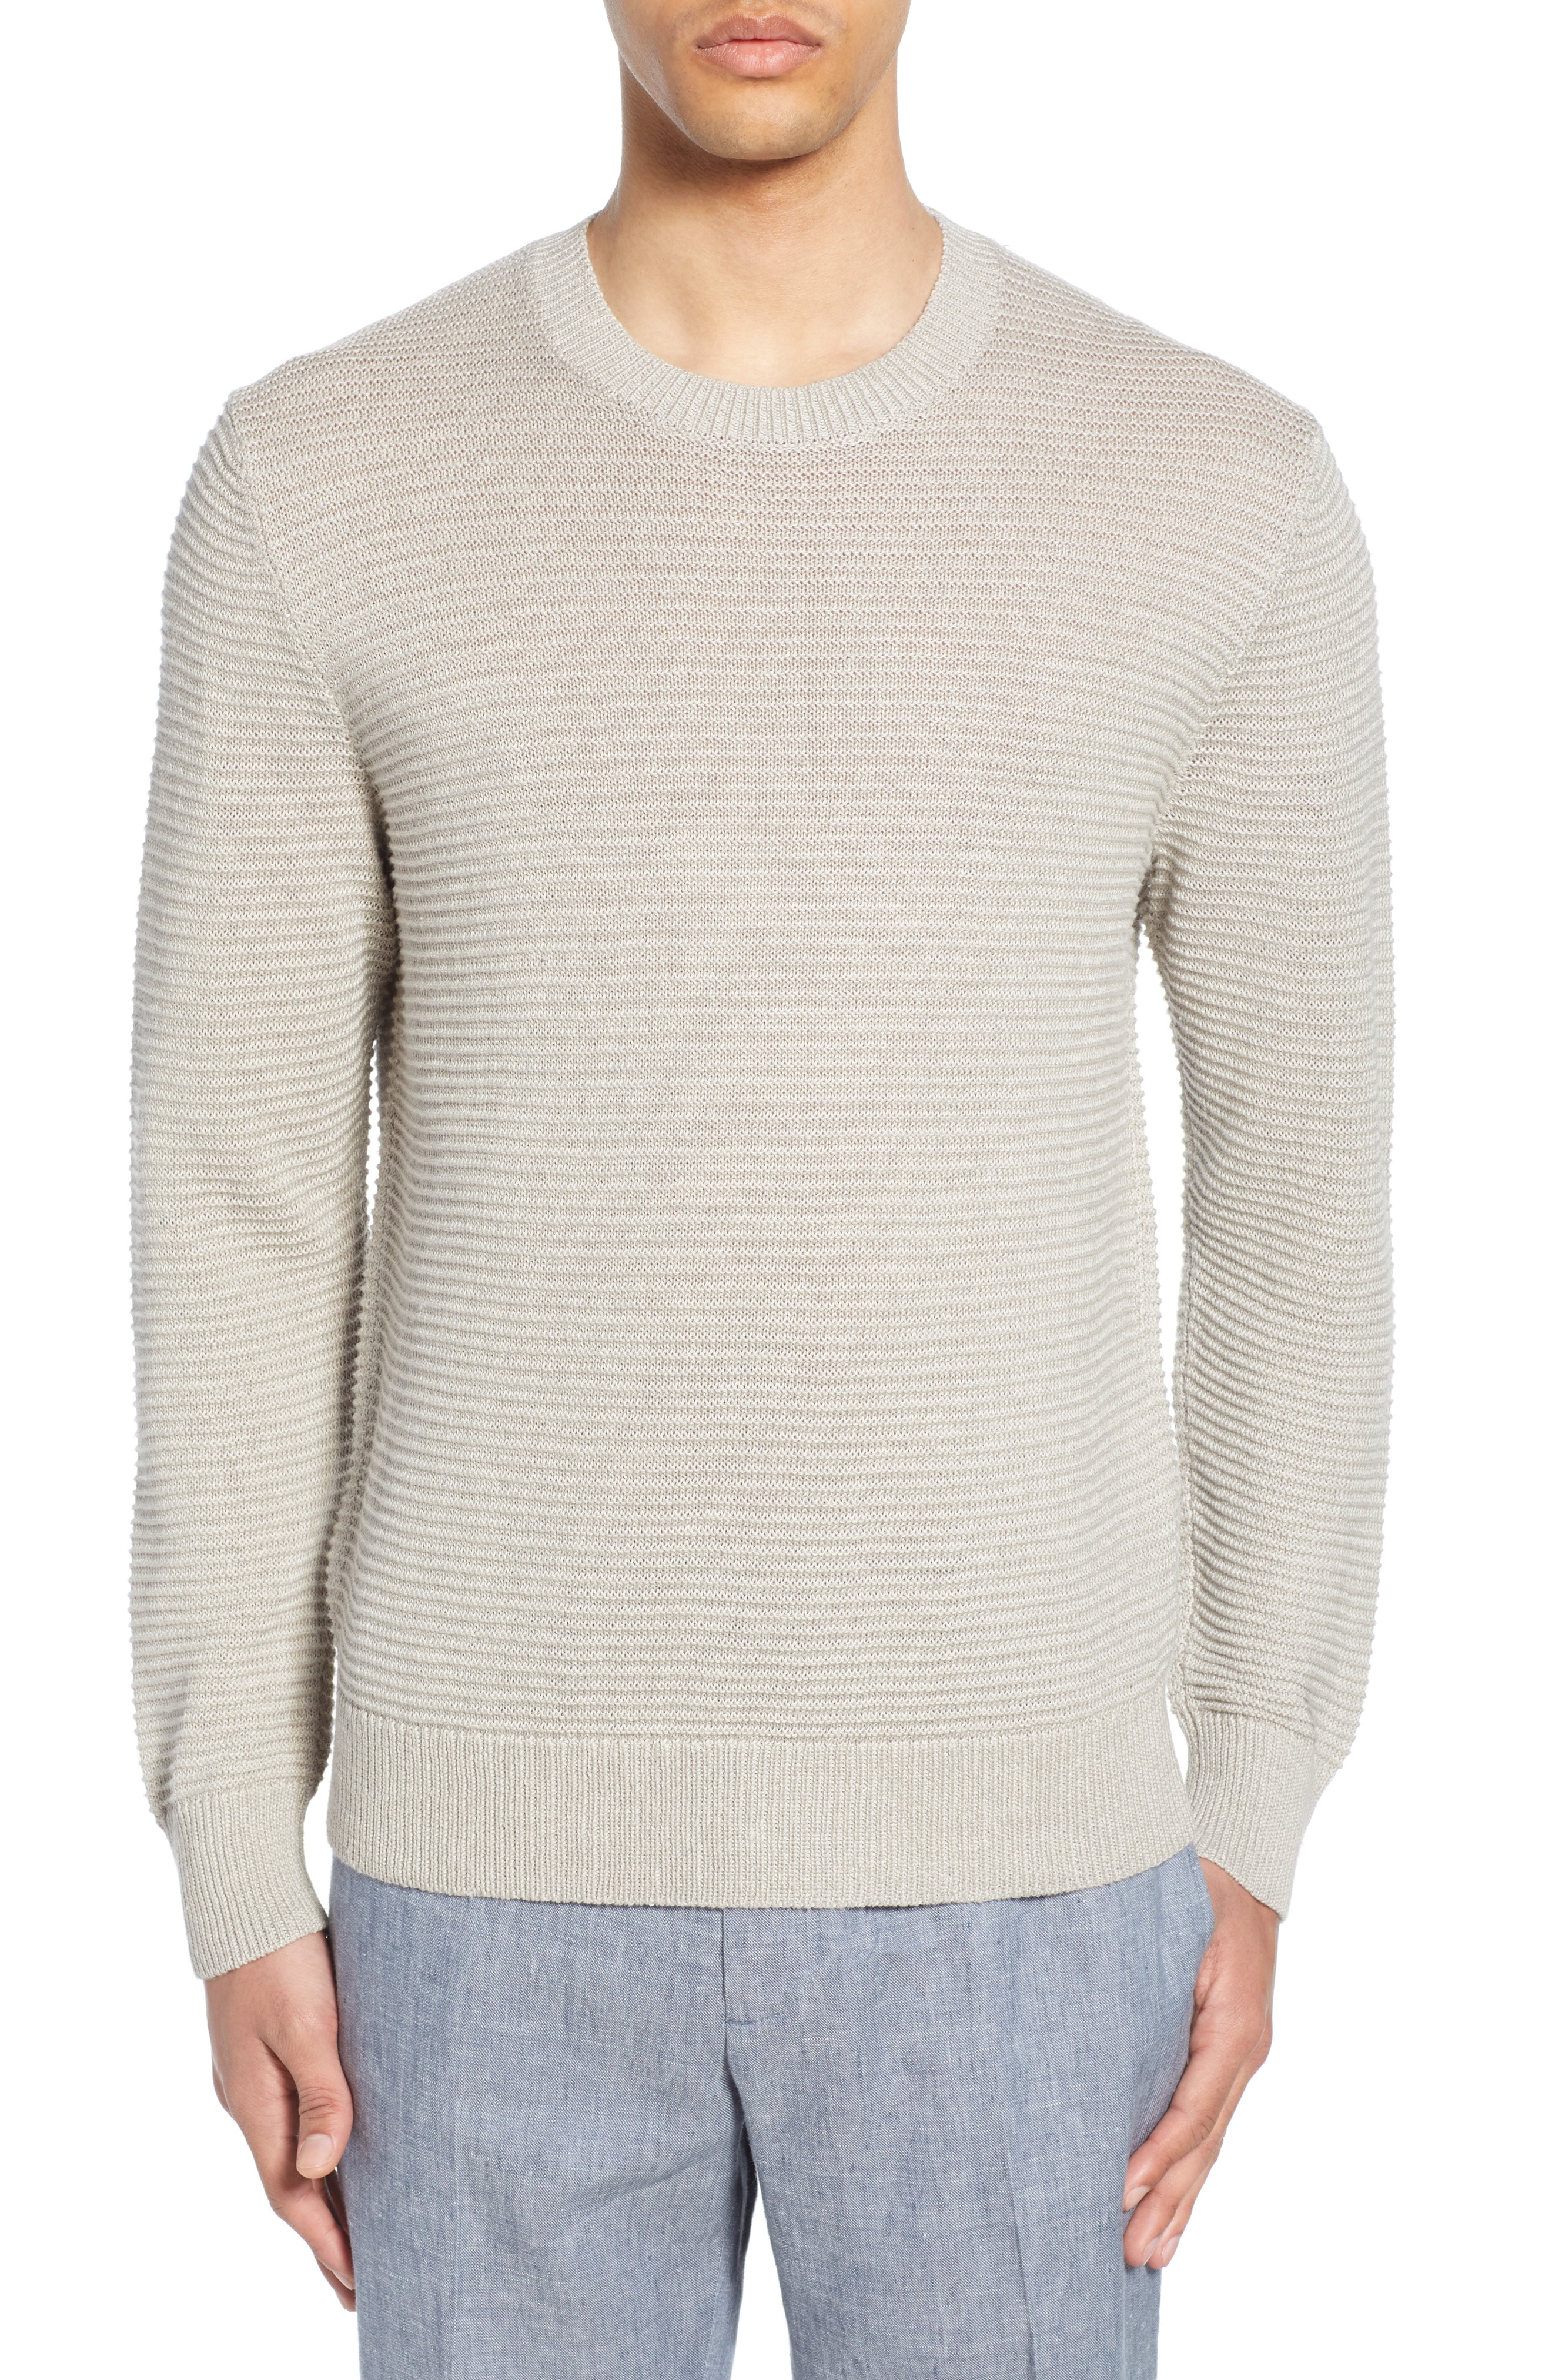 Men’s Club Monaco Links Linen Blend Sweater, Size Small – Beige | The ...